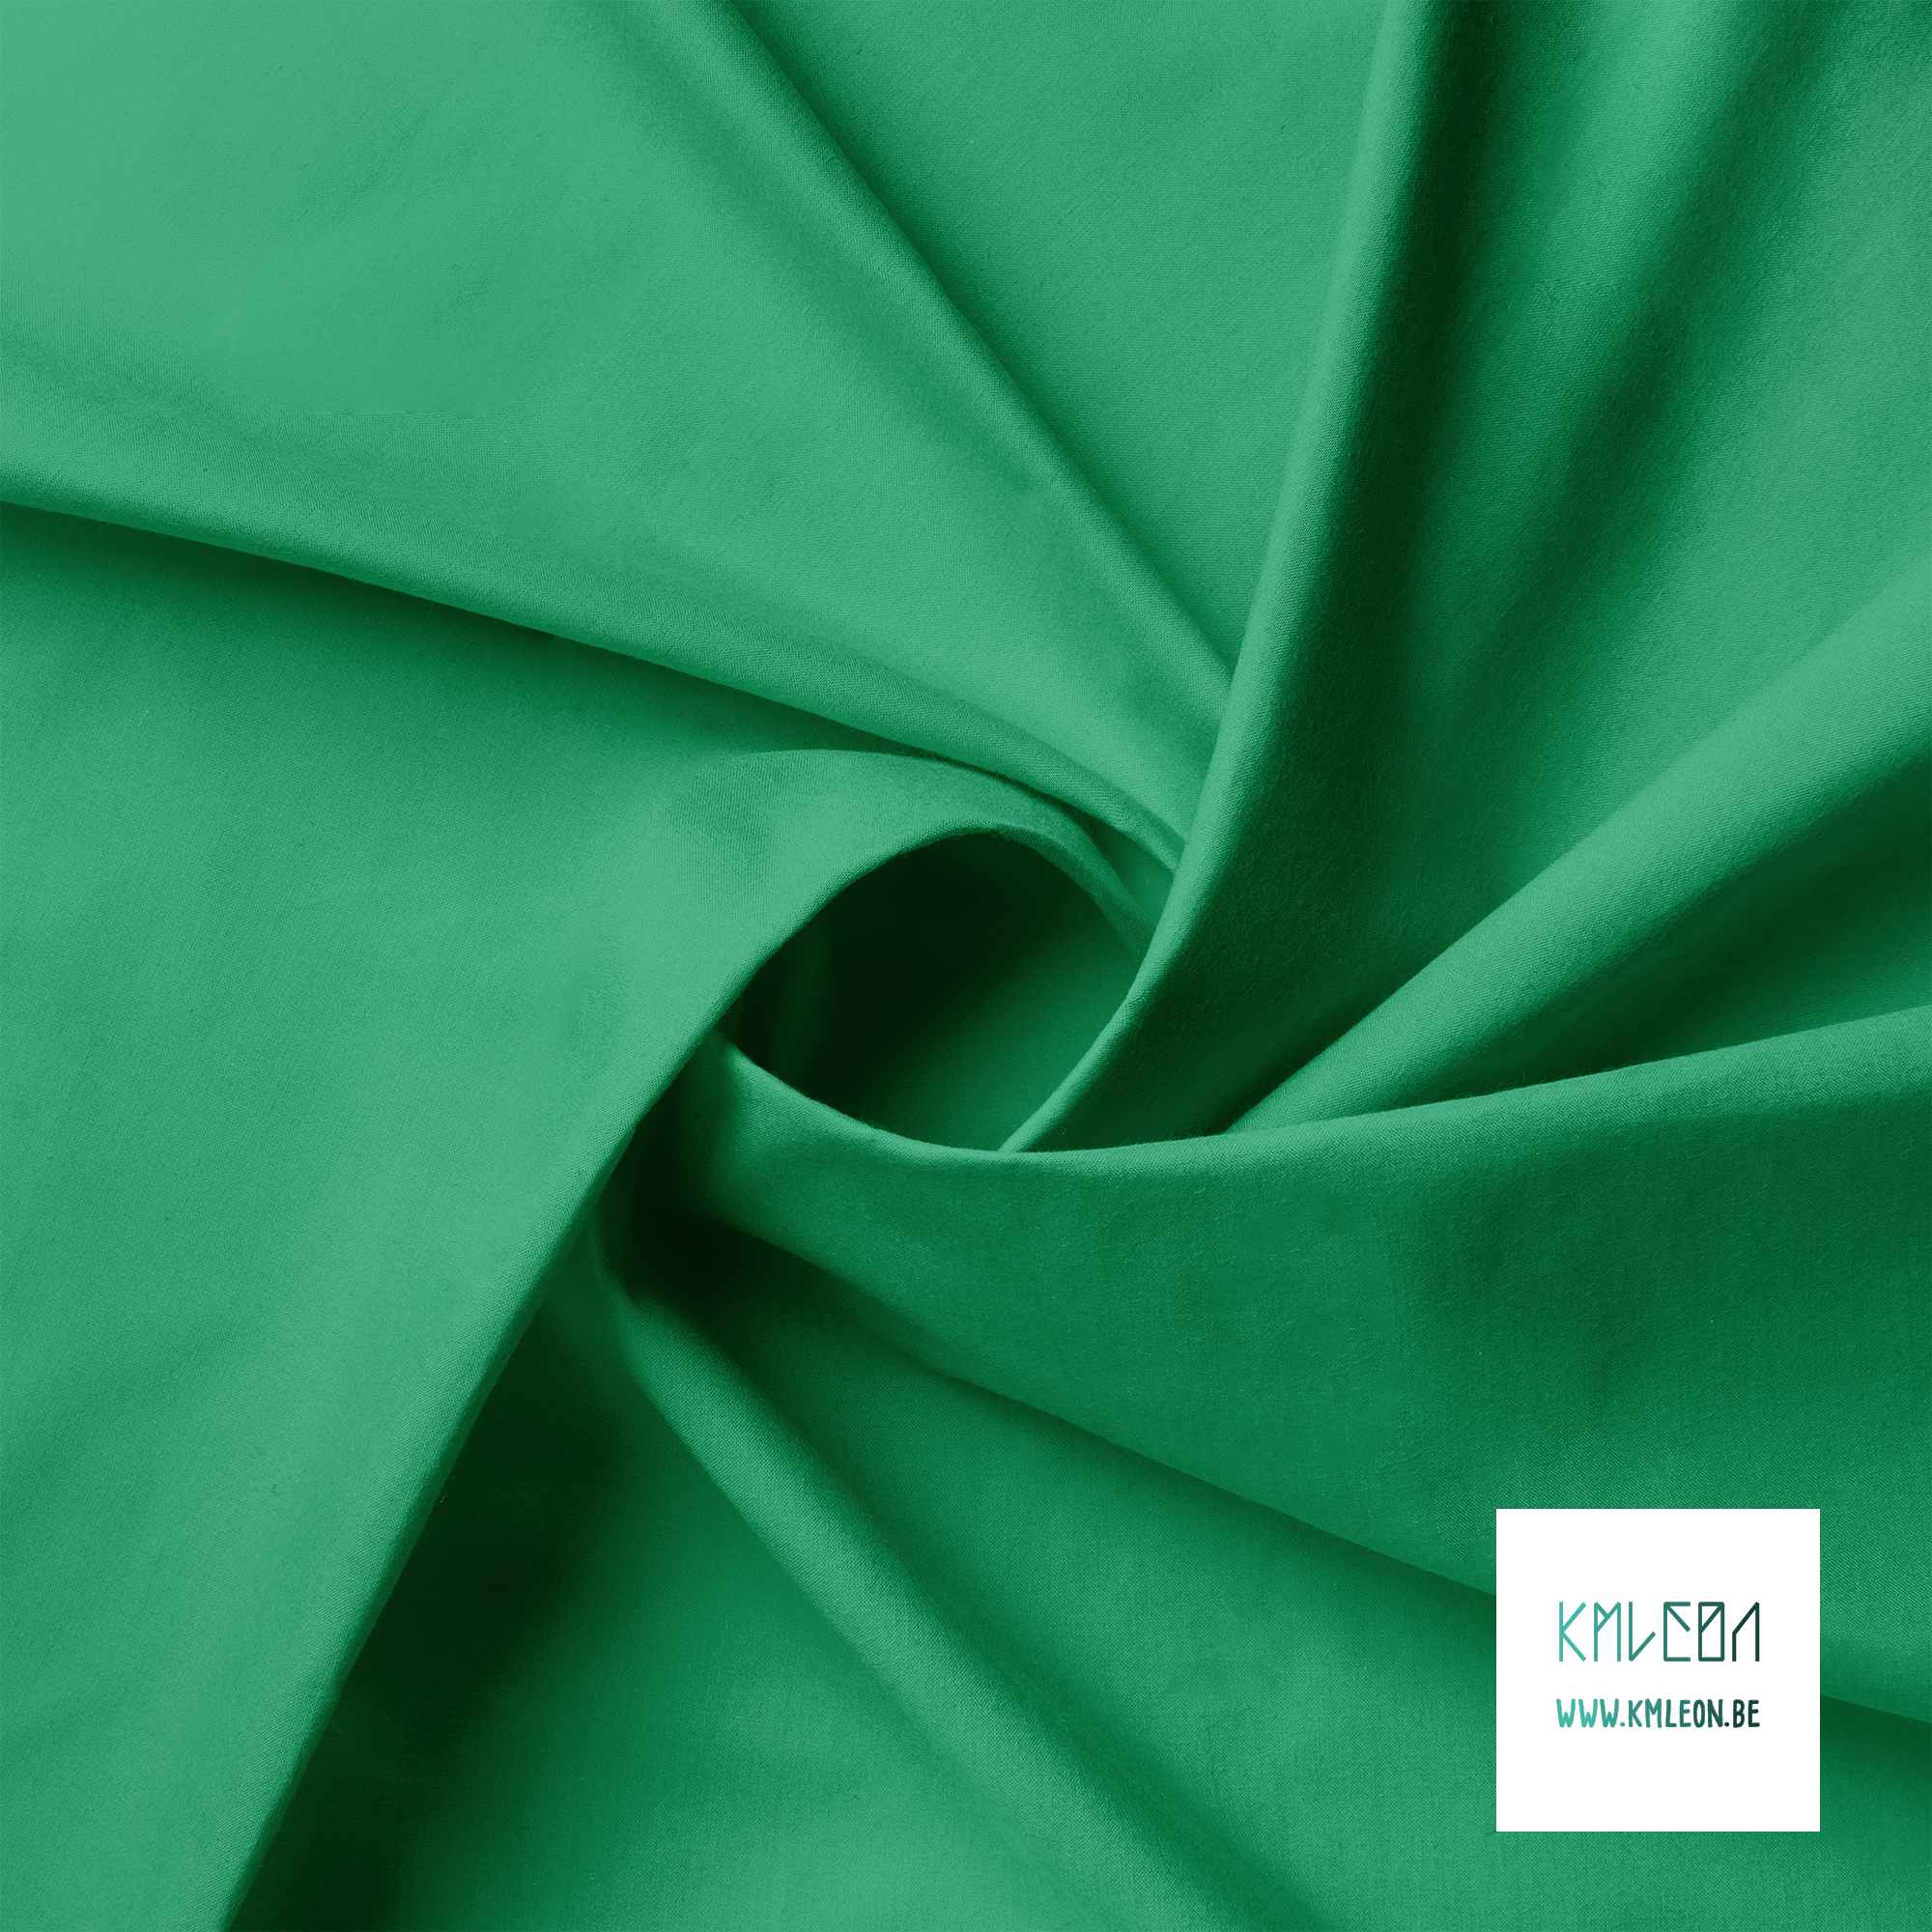 Solid jade green fabric